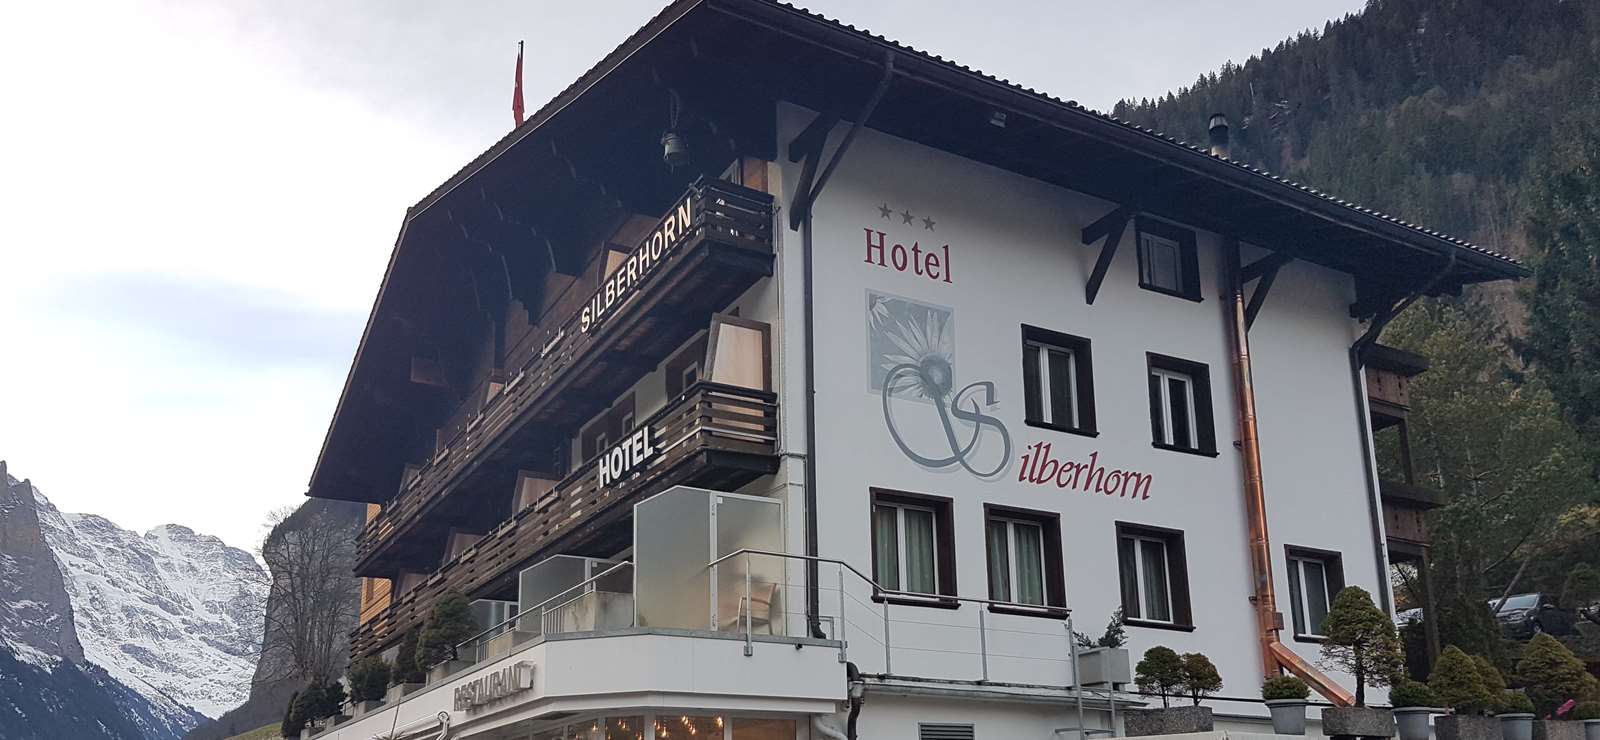 The Hotel Silberhorn in Lauterbrunnen